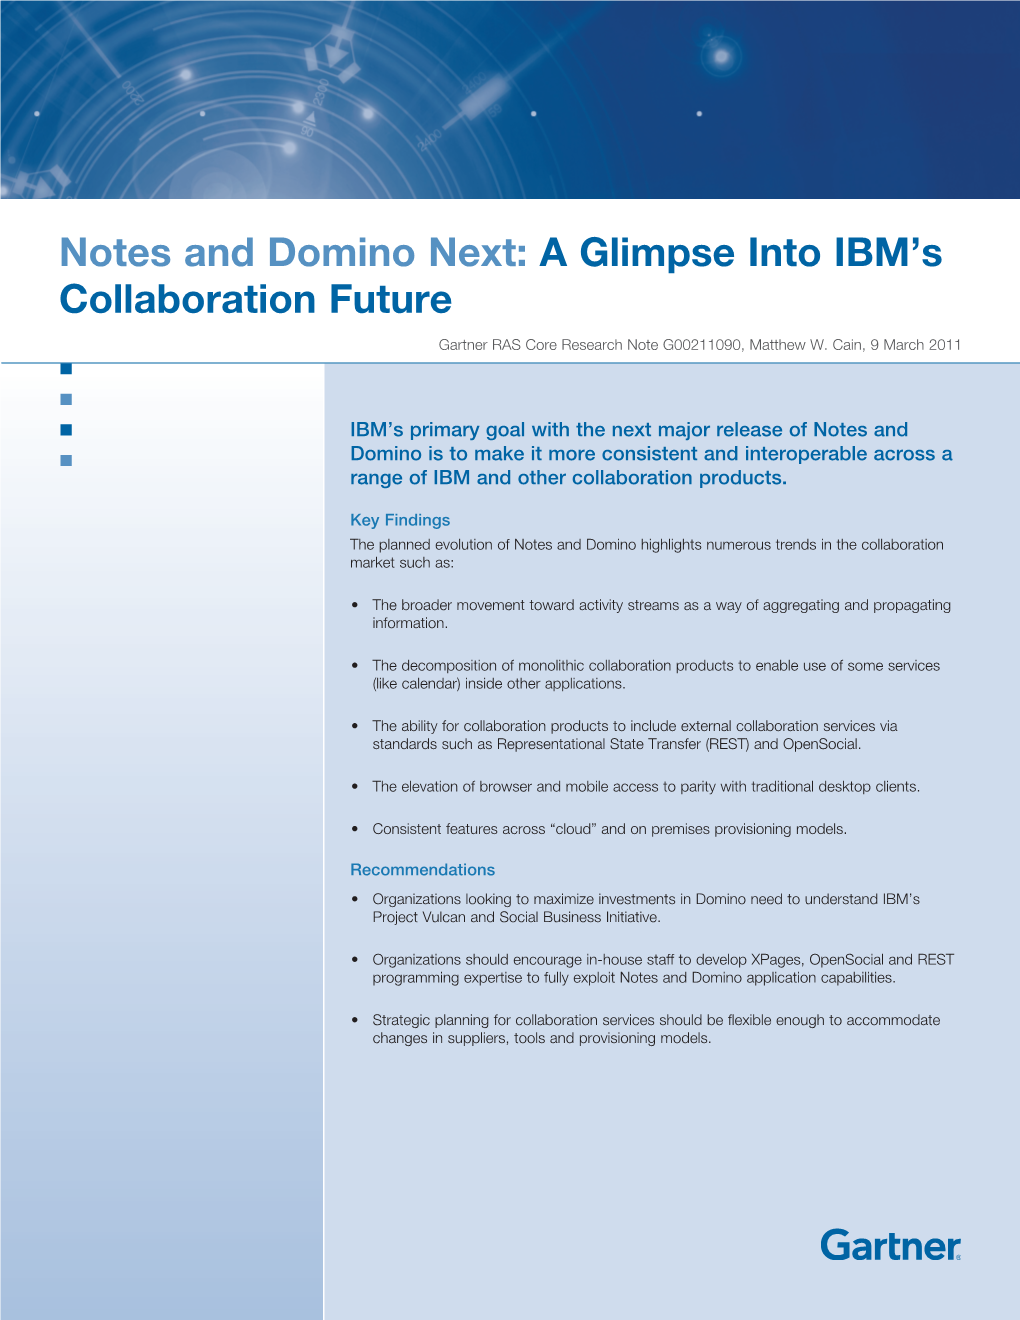 Notes and Domino Next: a Glimpse Into IBM’S Collaboration Future